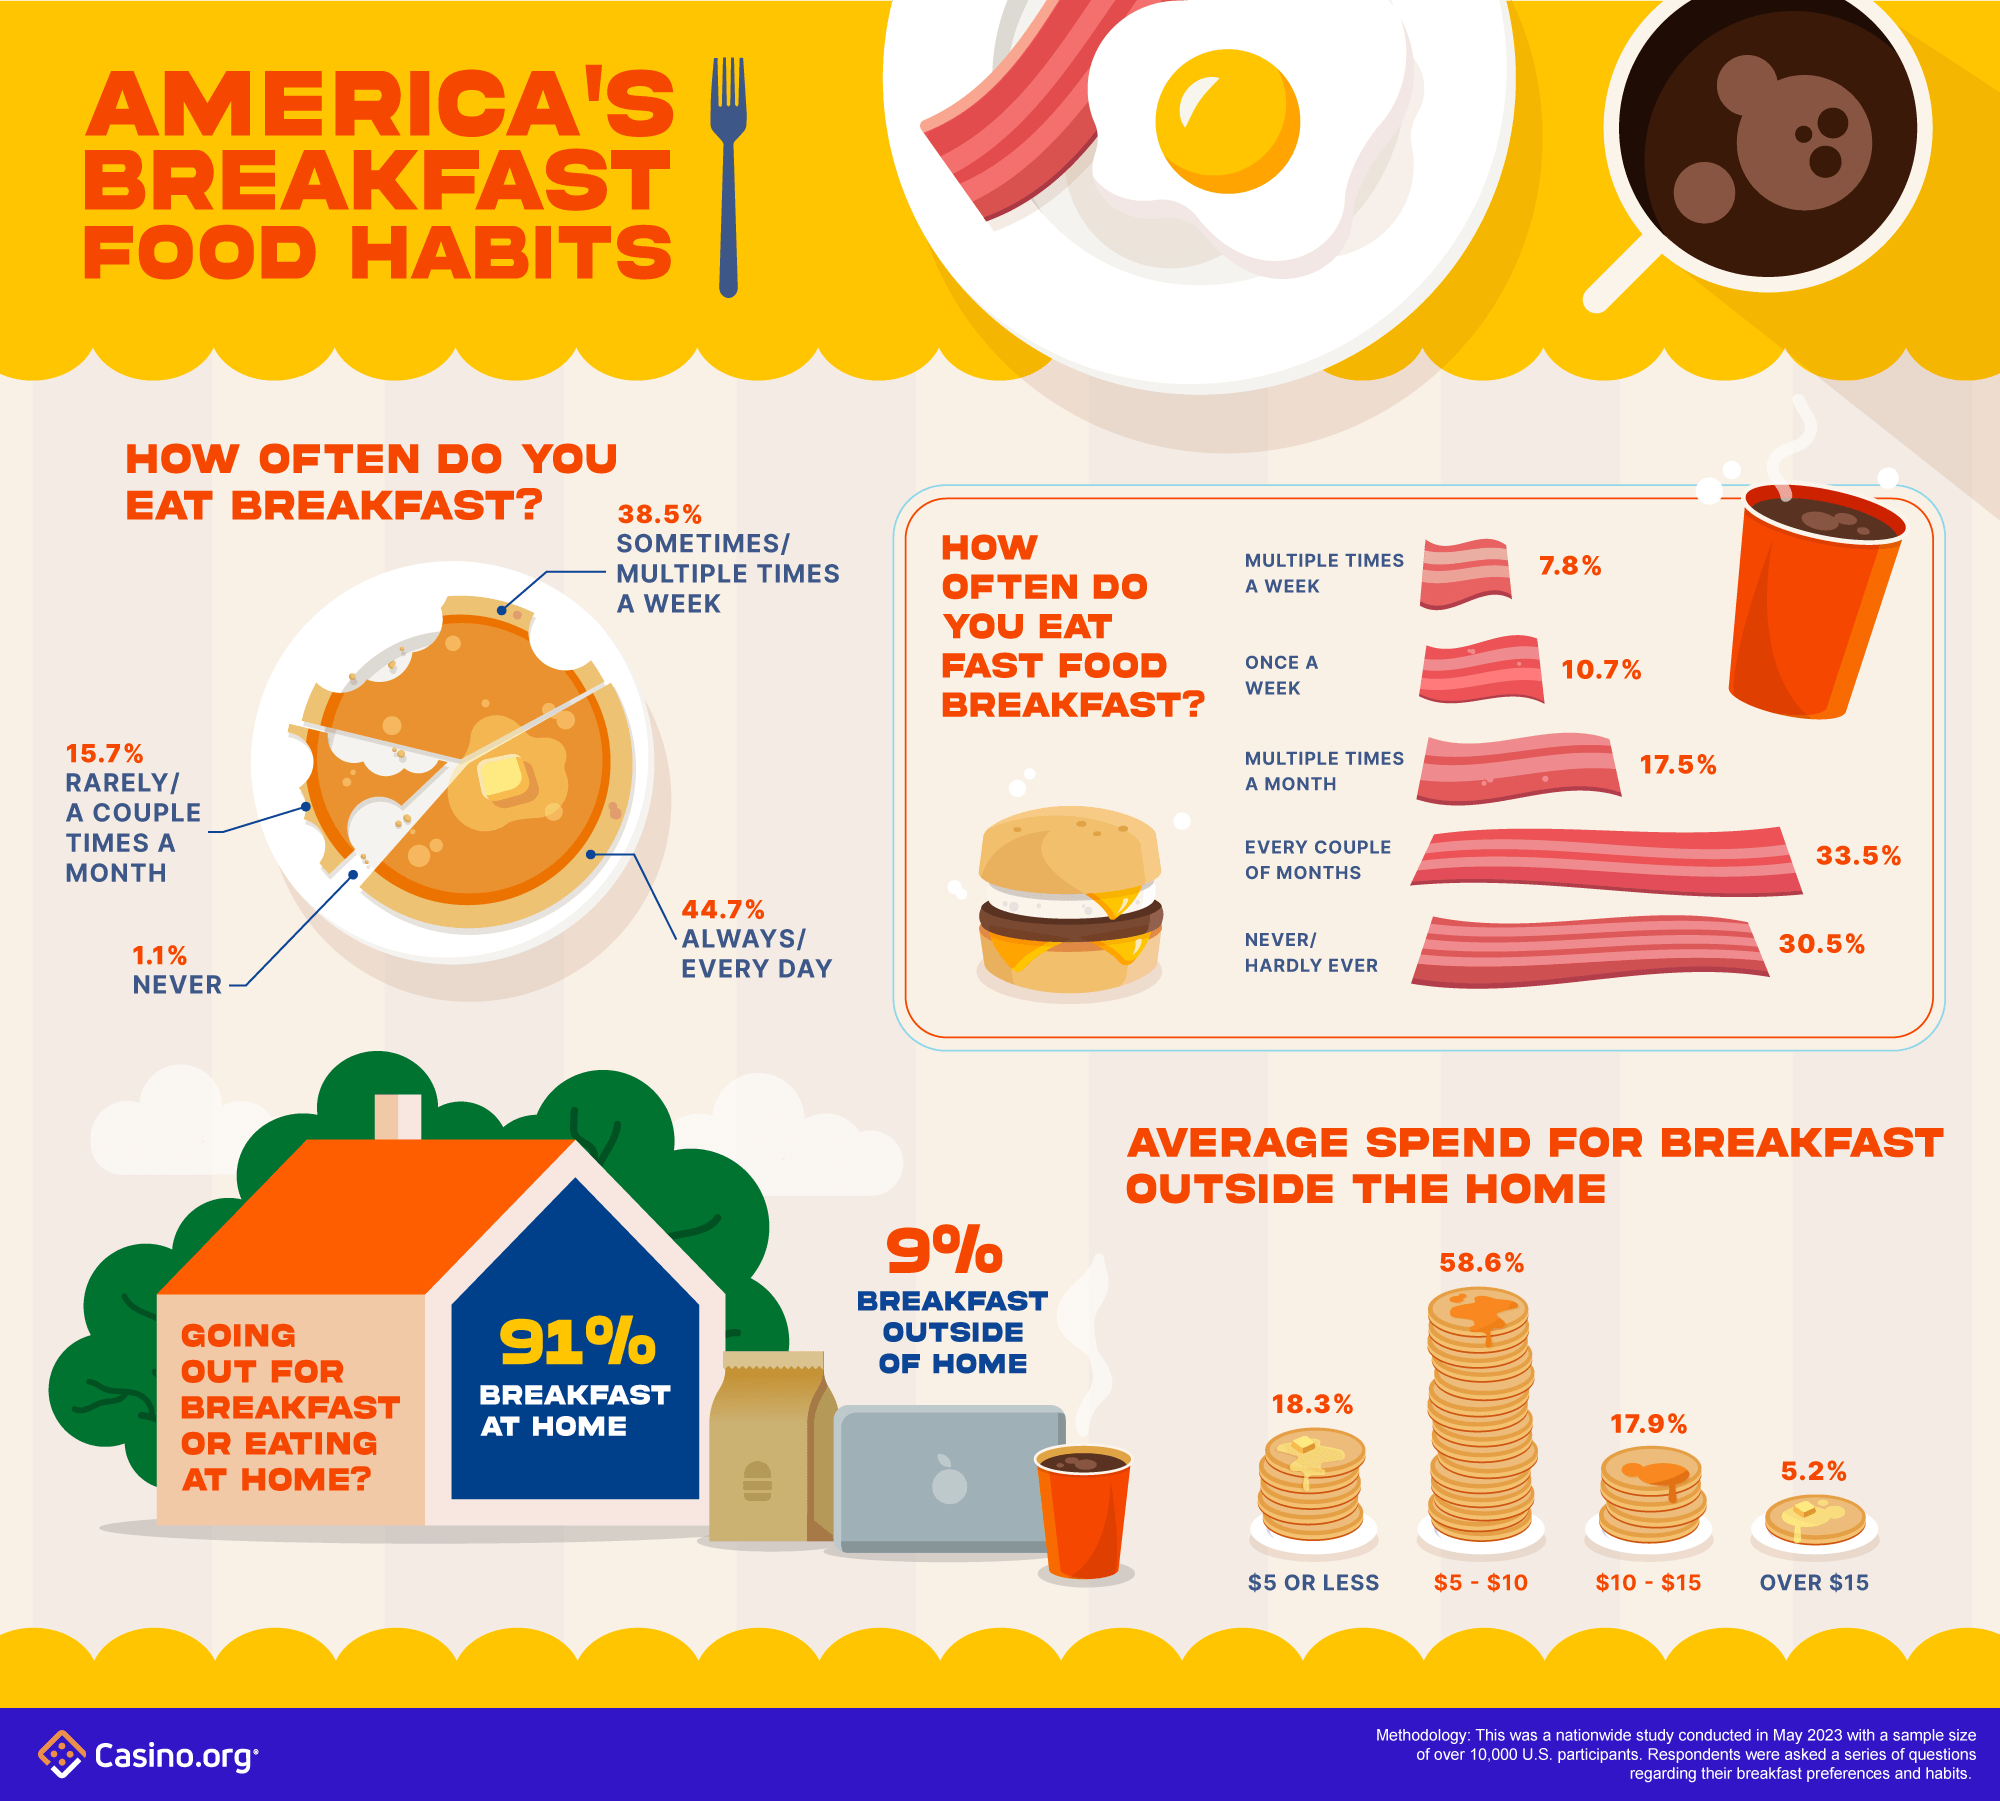 America's Breakfast Food Habits